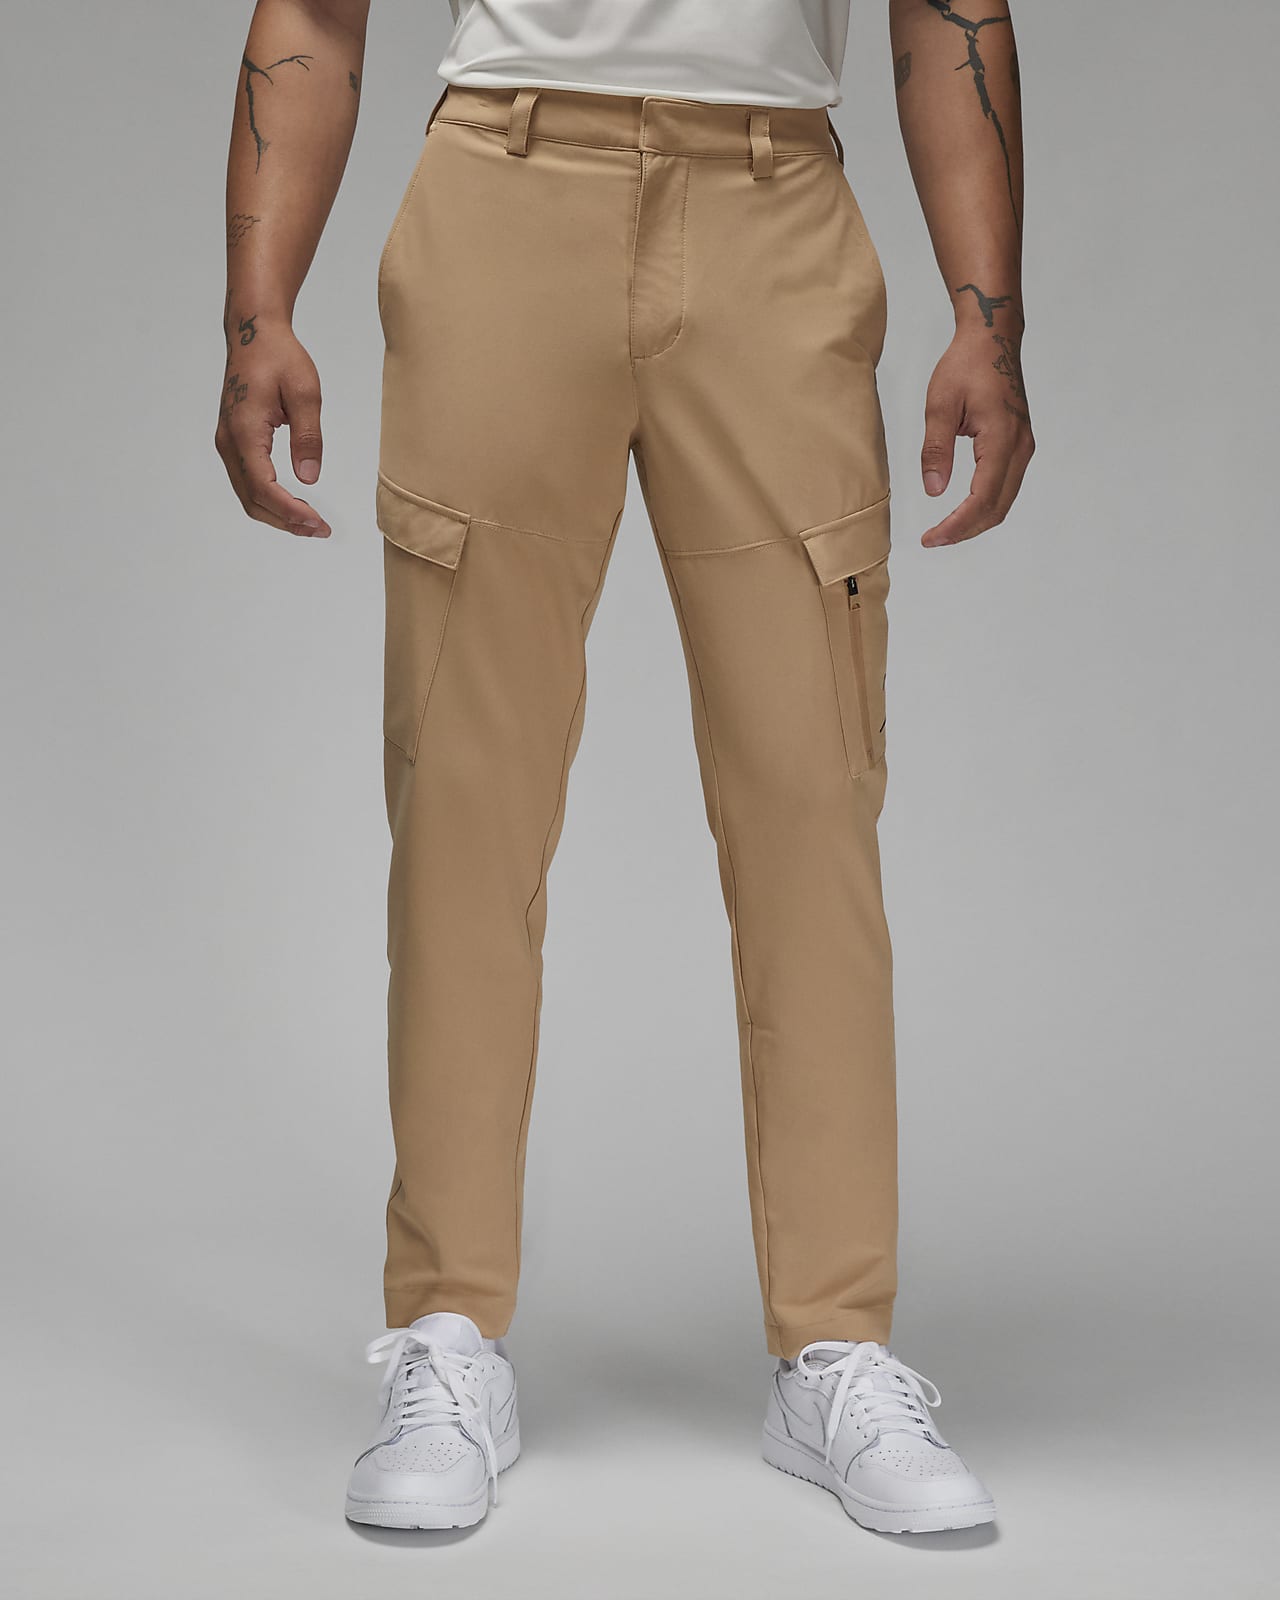 Buy White Trousers & Pants for Men by RAYMOND Online | Ajio.com-saigonsouth.com.vn